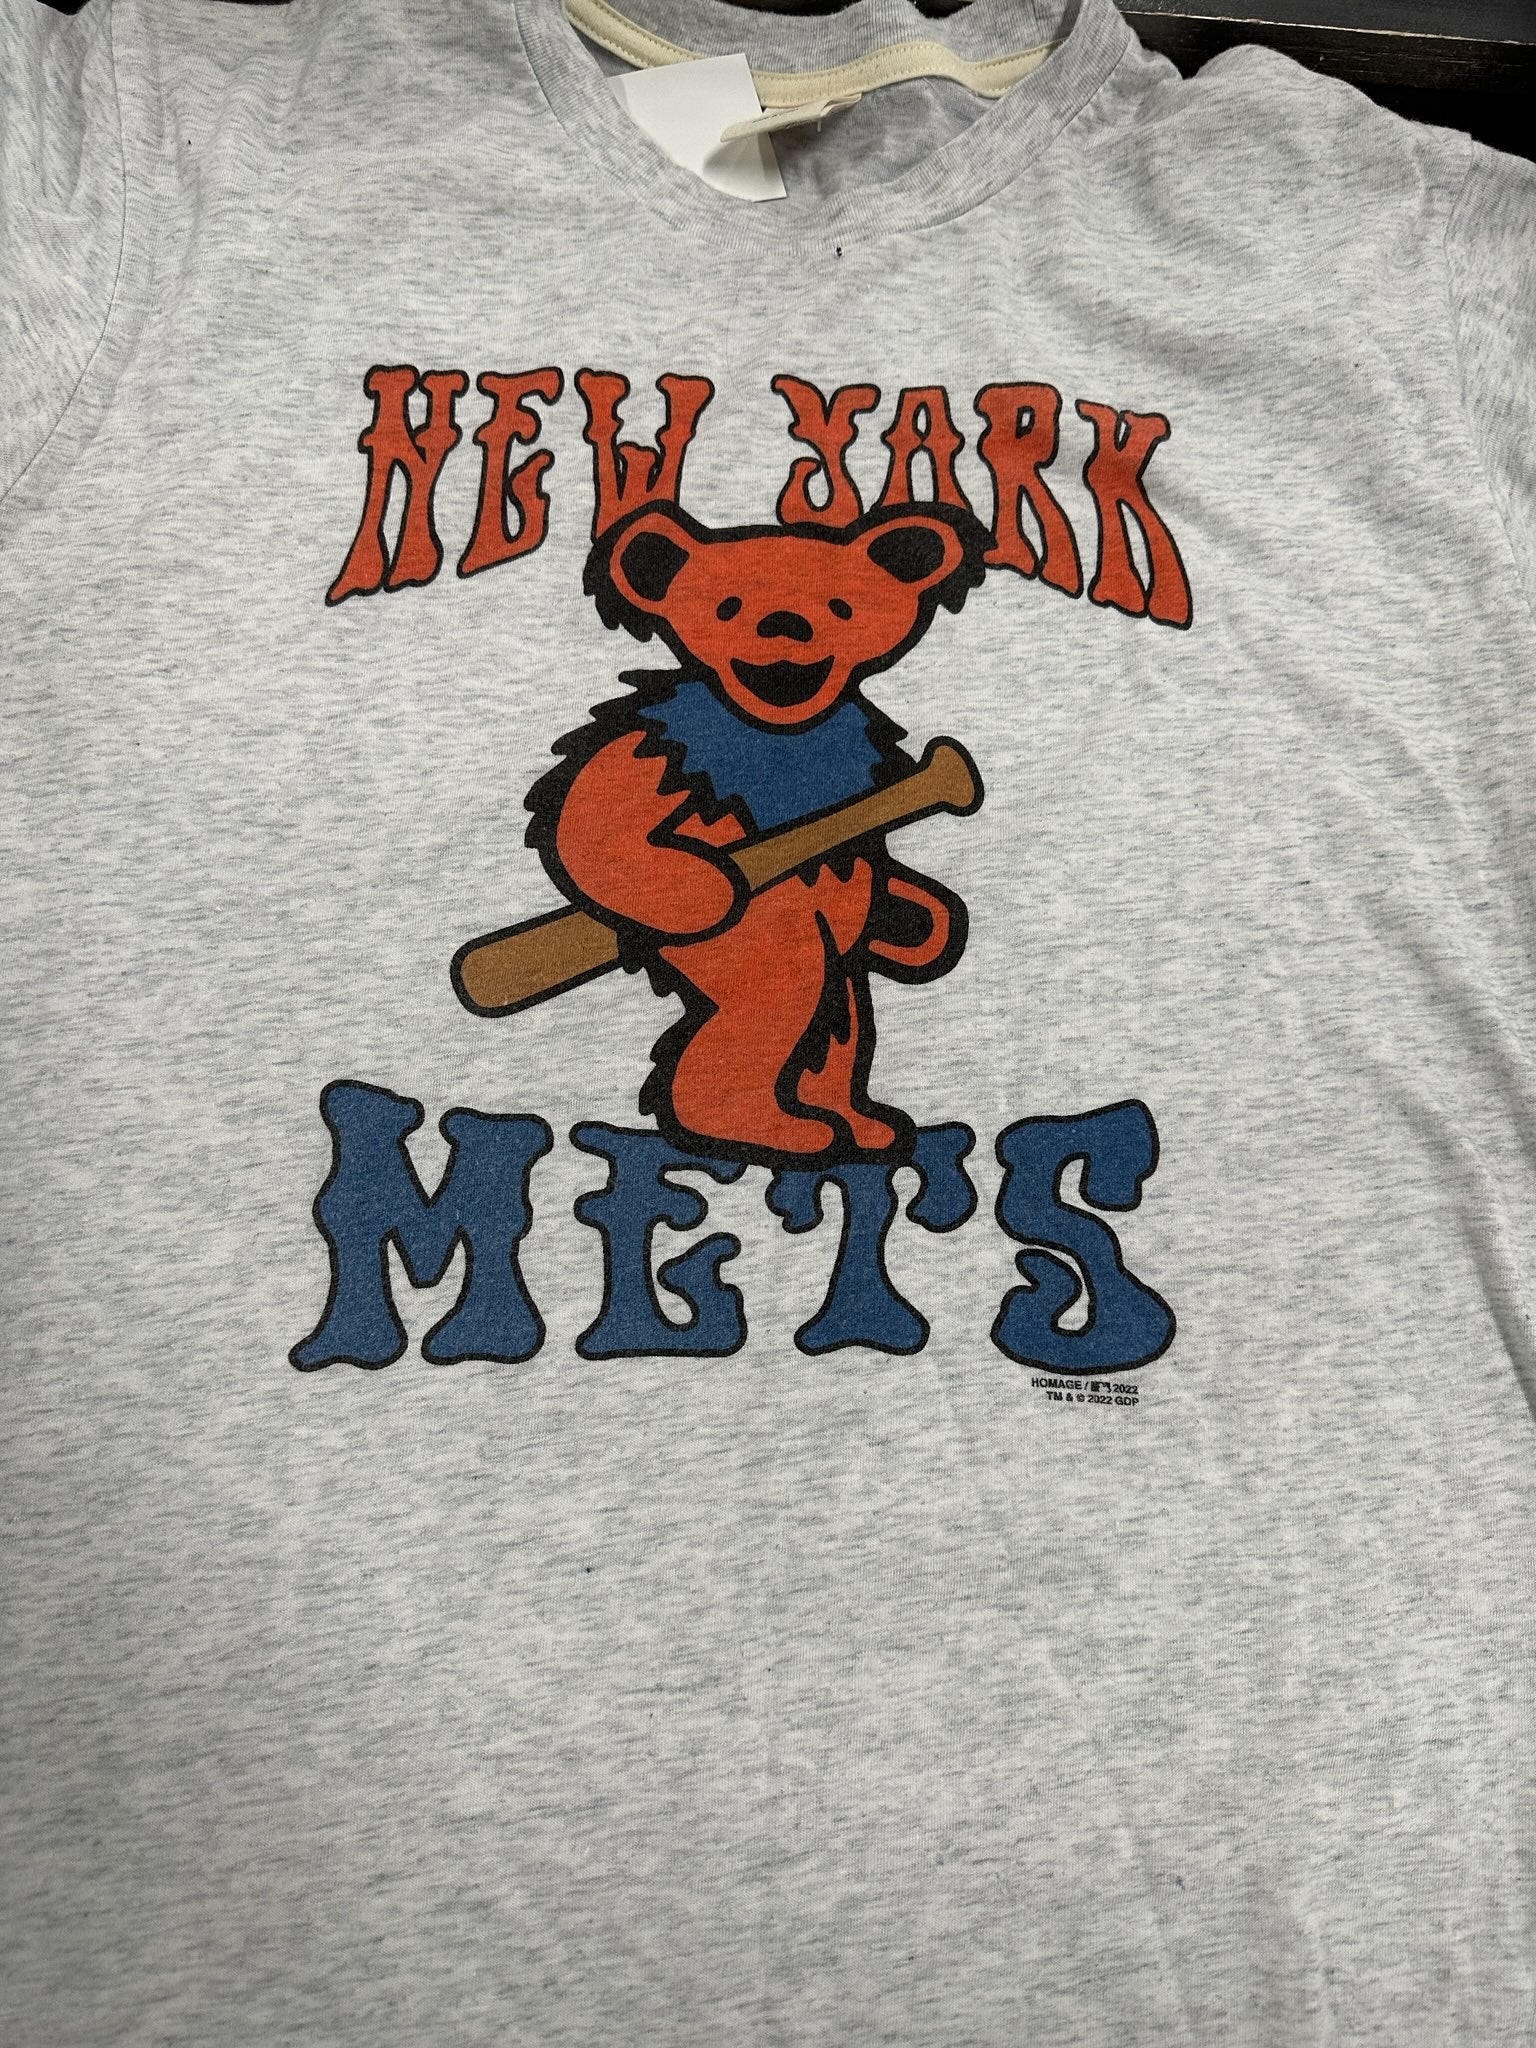 Grateful Dead/New York Mets 2022 Homage T-Shirt, White/Grey, L